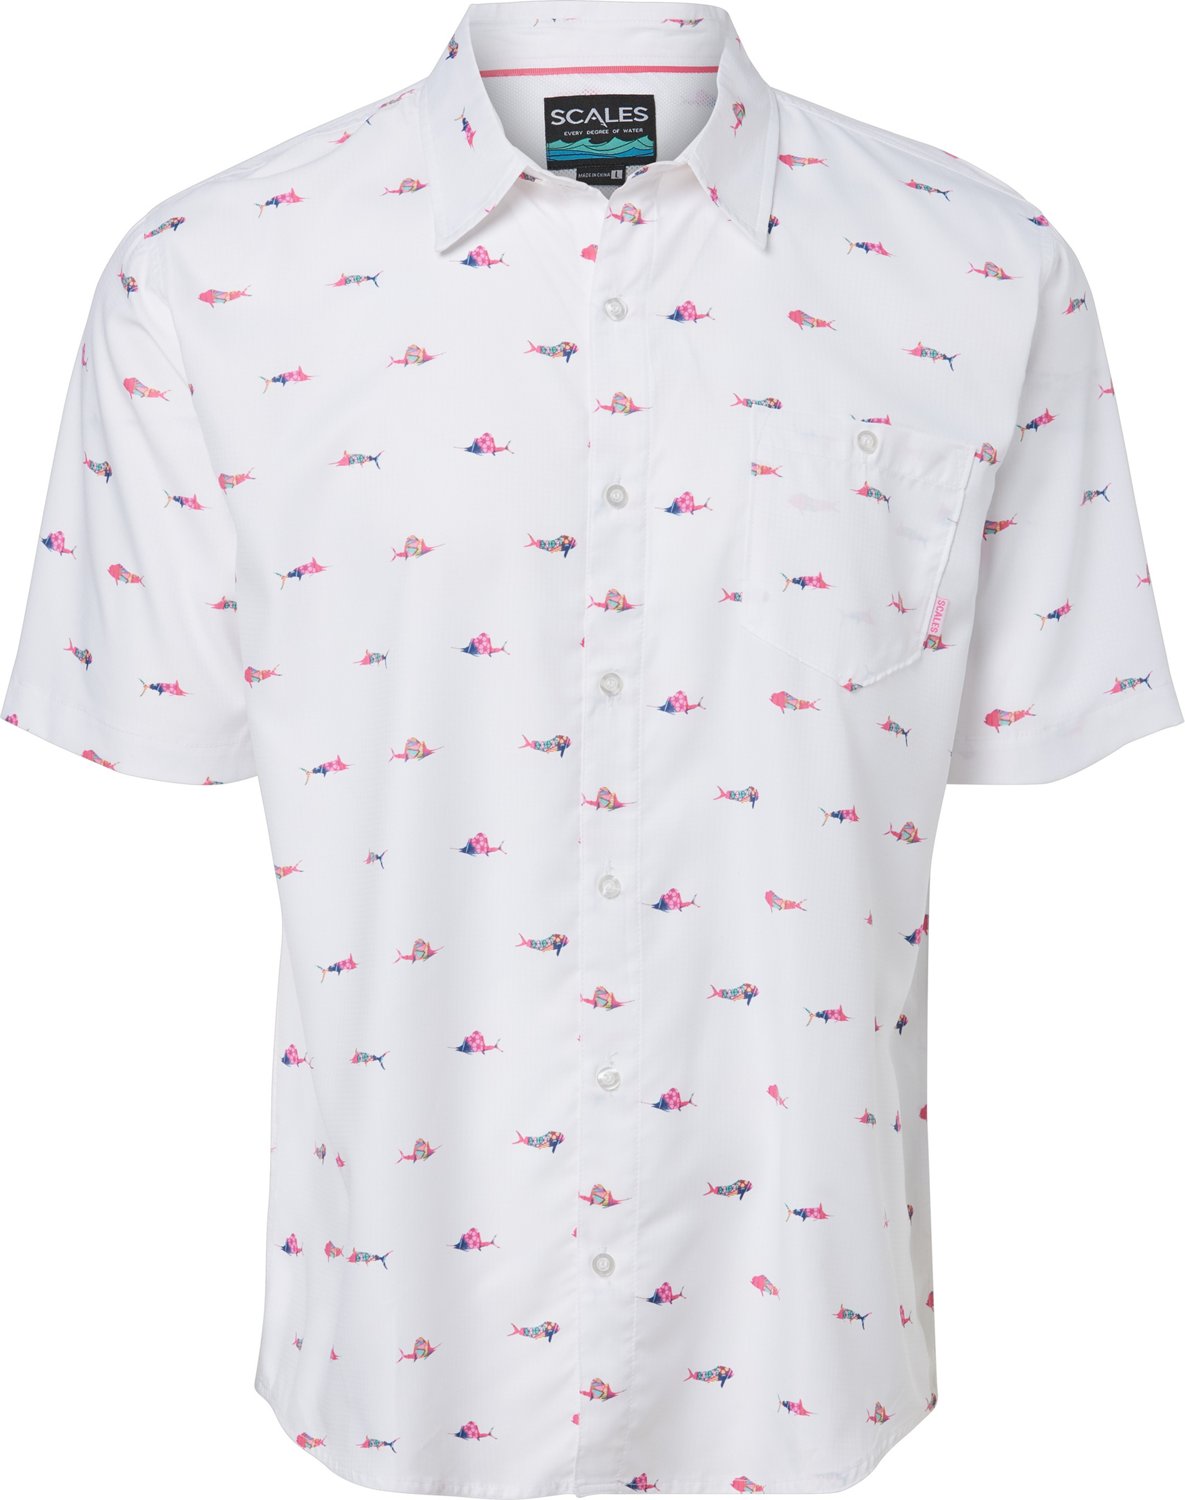 SCALES Men's Trippy Fish Button Down Shirt